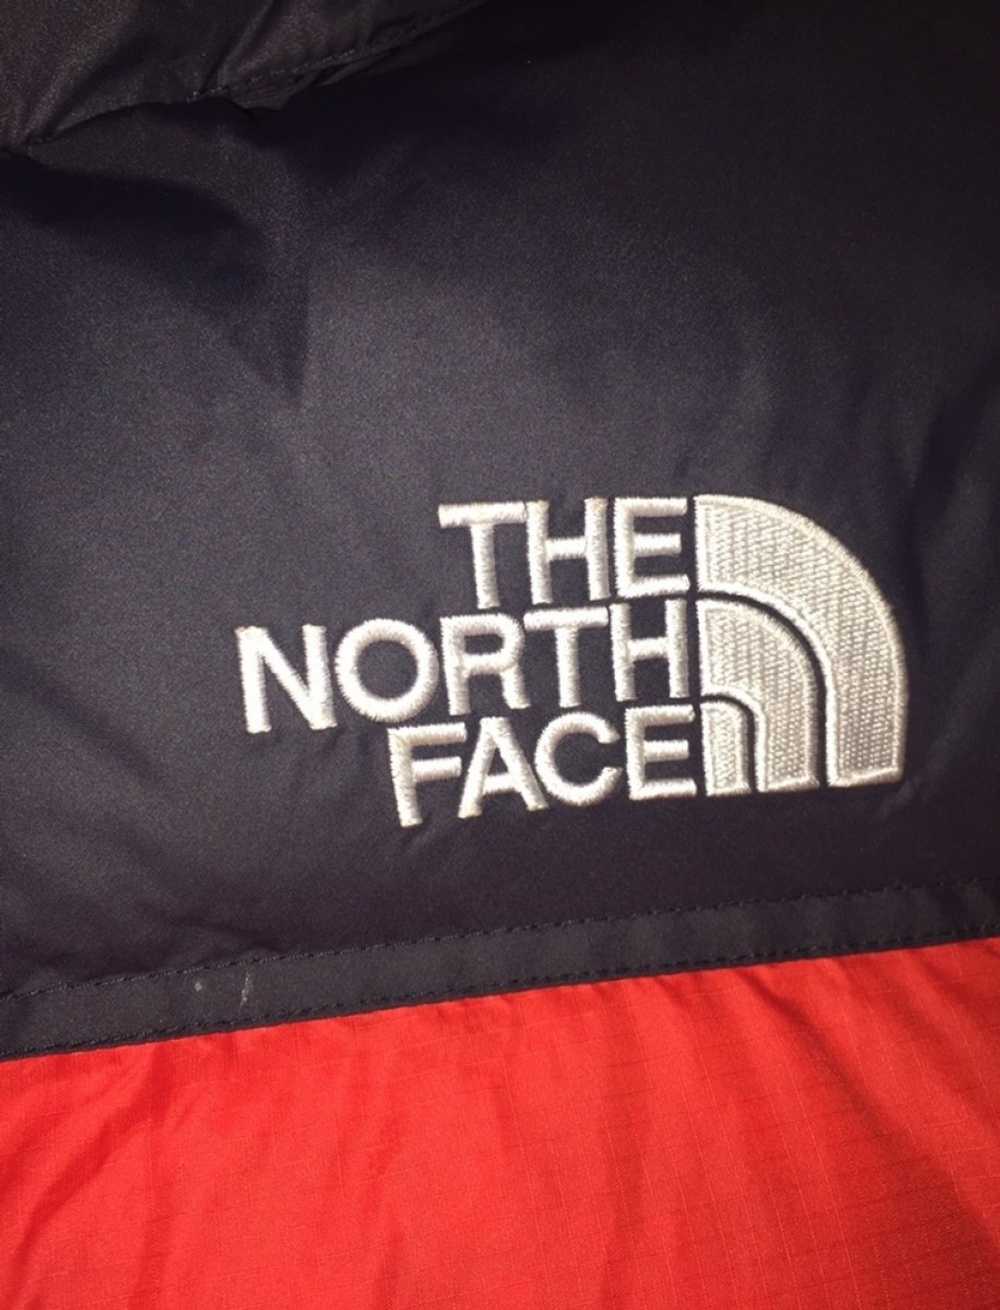 The North Face Bubble Vest - image 3